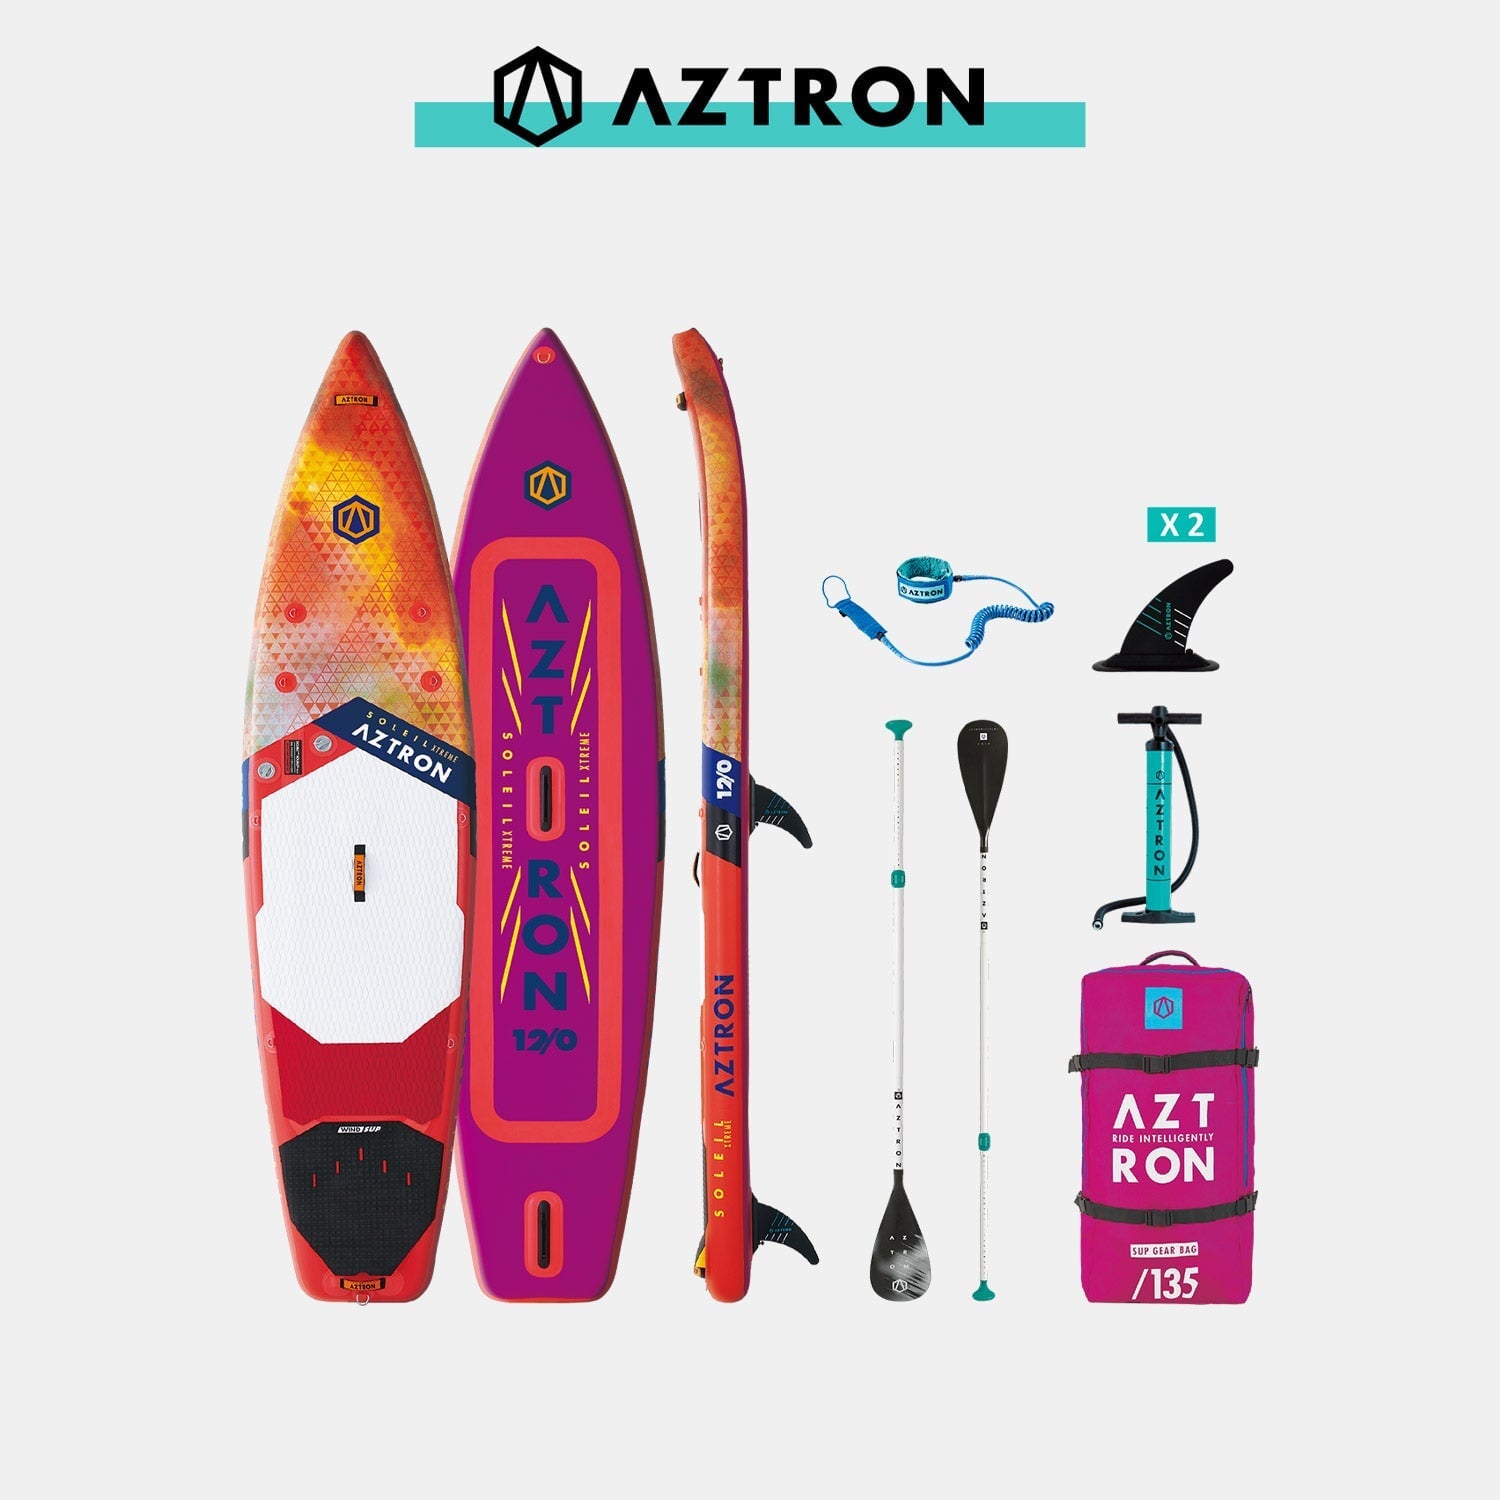 AZTRON Soleil Xtreme Windsurf Touring 12'0" iSUP Set, 366x81x15cm, Volumen 325L